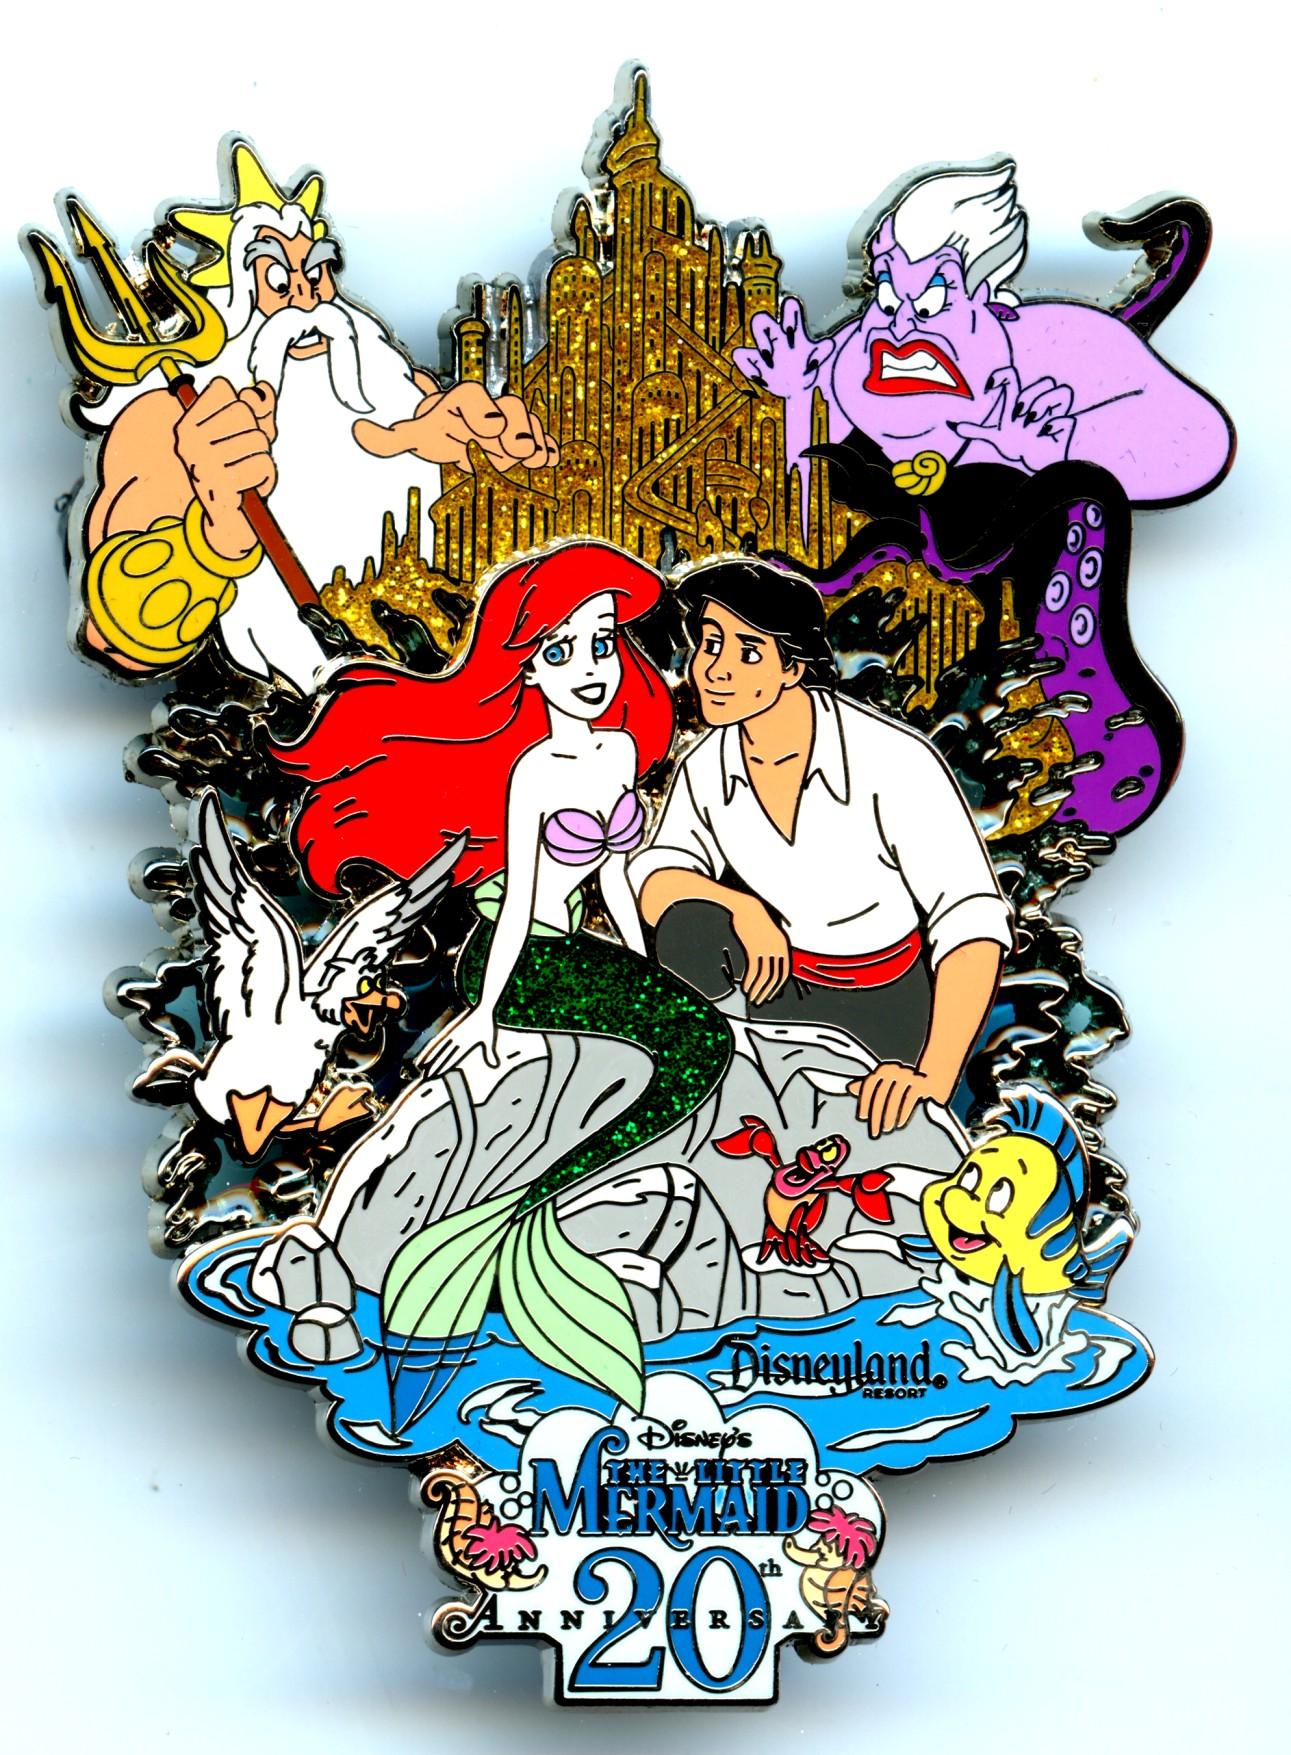 DLR - Ariel, Eric, Ursula, Triton, Sebastian, Flounder, Scuttle - Little Mermaid - 20th Anniversary Featured Artist 2009 - Jumbo